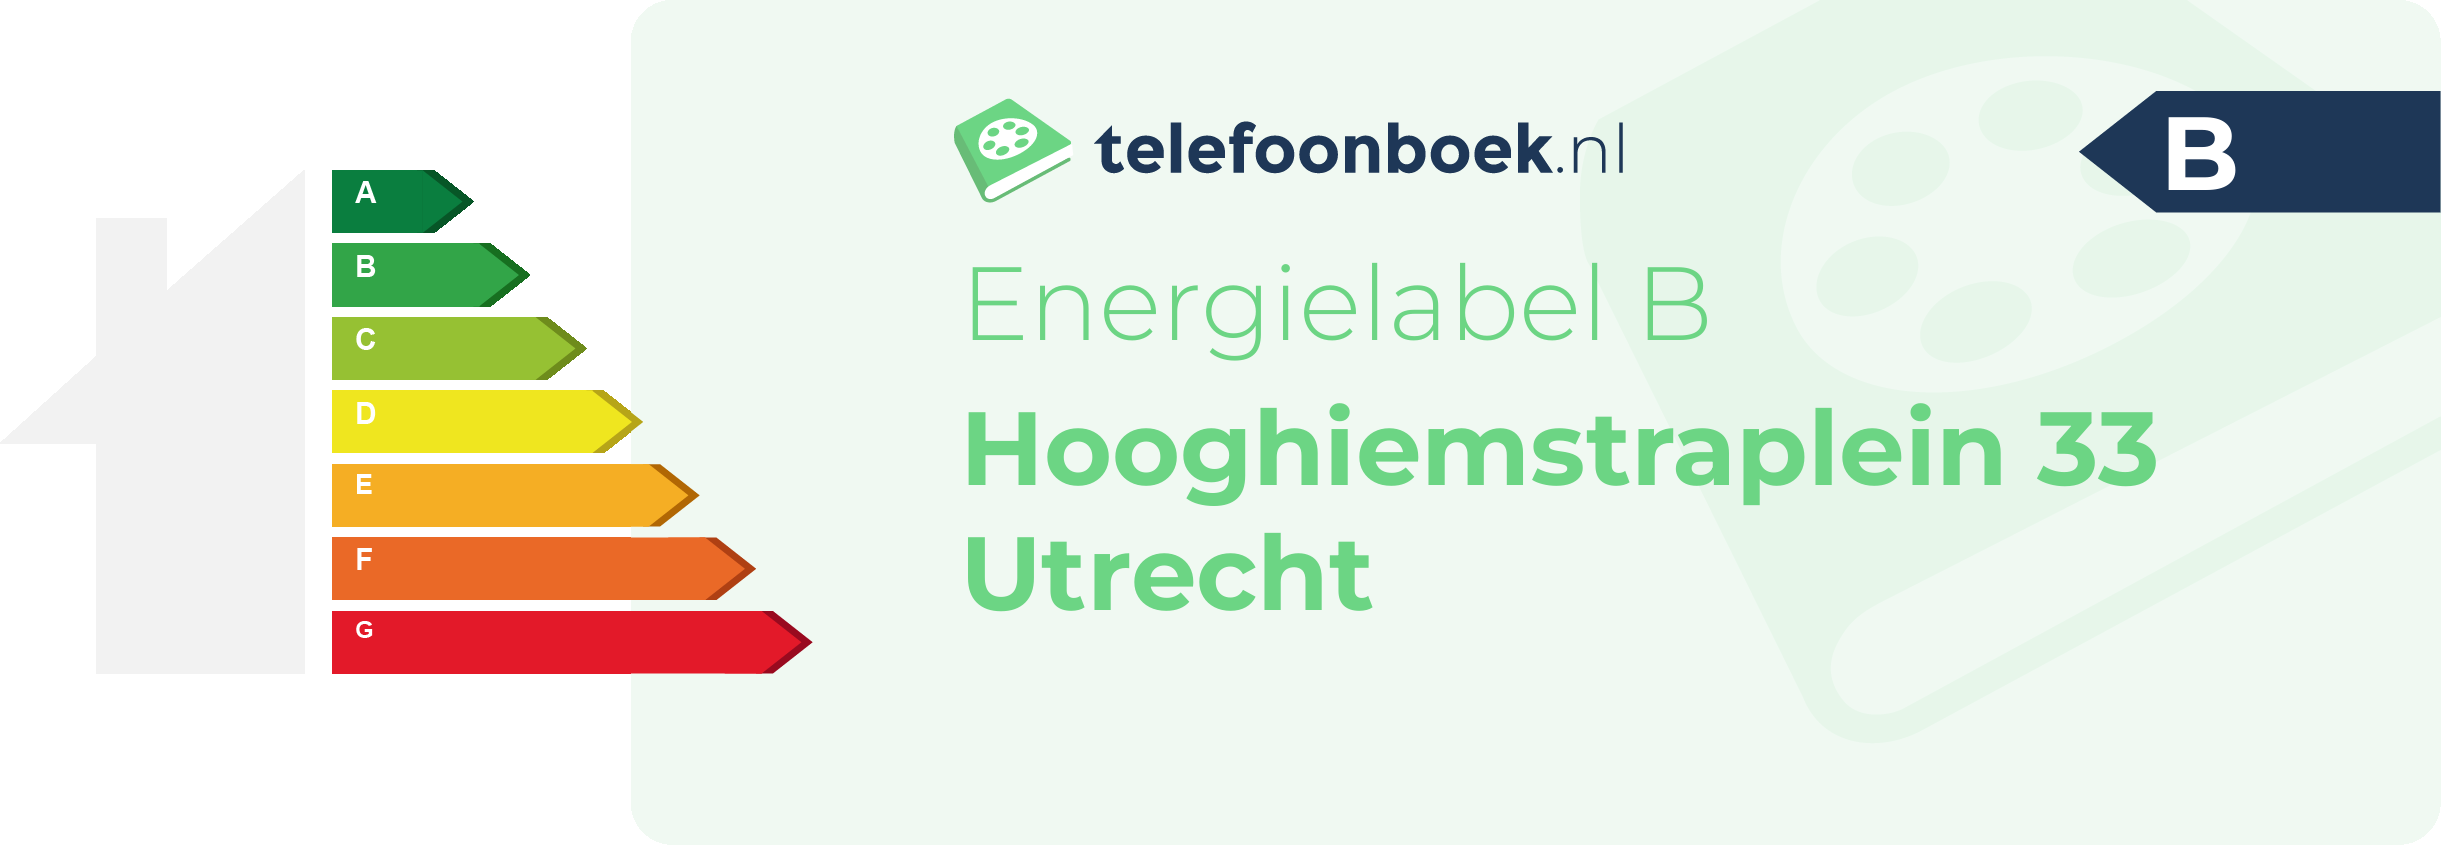 Energielabel Hooghiemstraplein 33 Utrecht